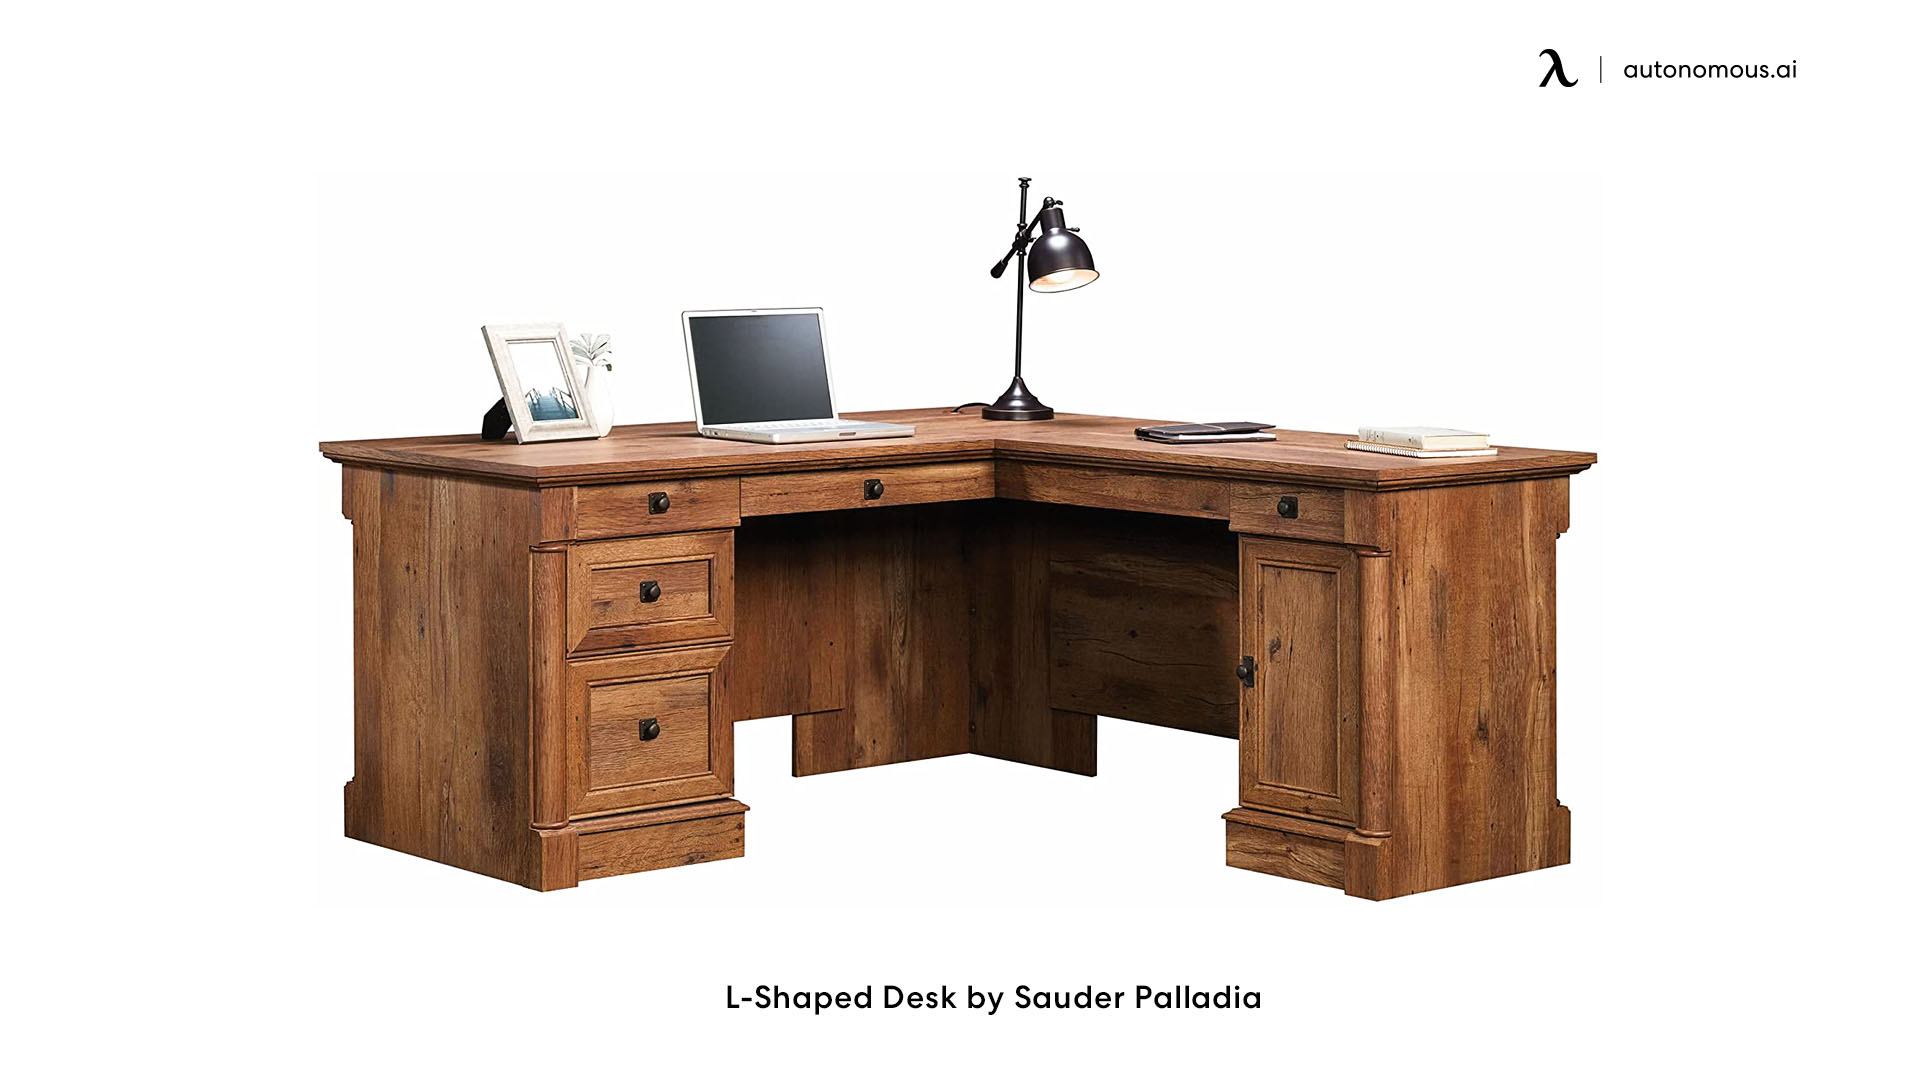 L-Shaped Desk by Sauder Palladia